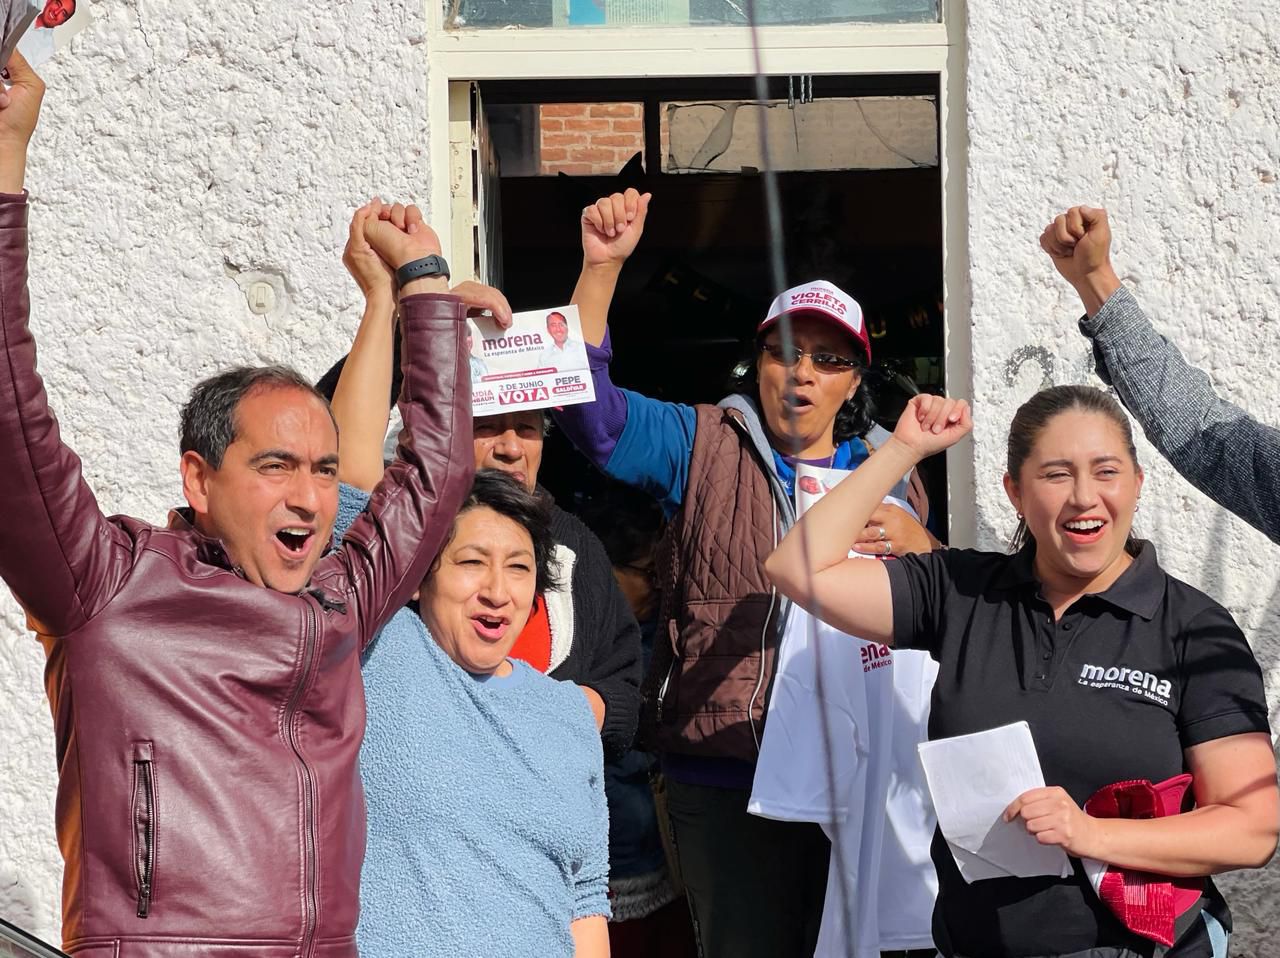 Inicia Pepe Saldívar actividades proselitistas en colonias de Guadalupe